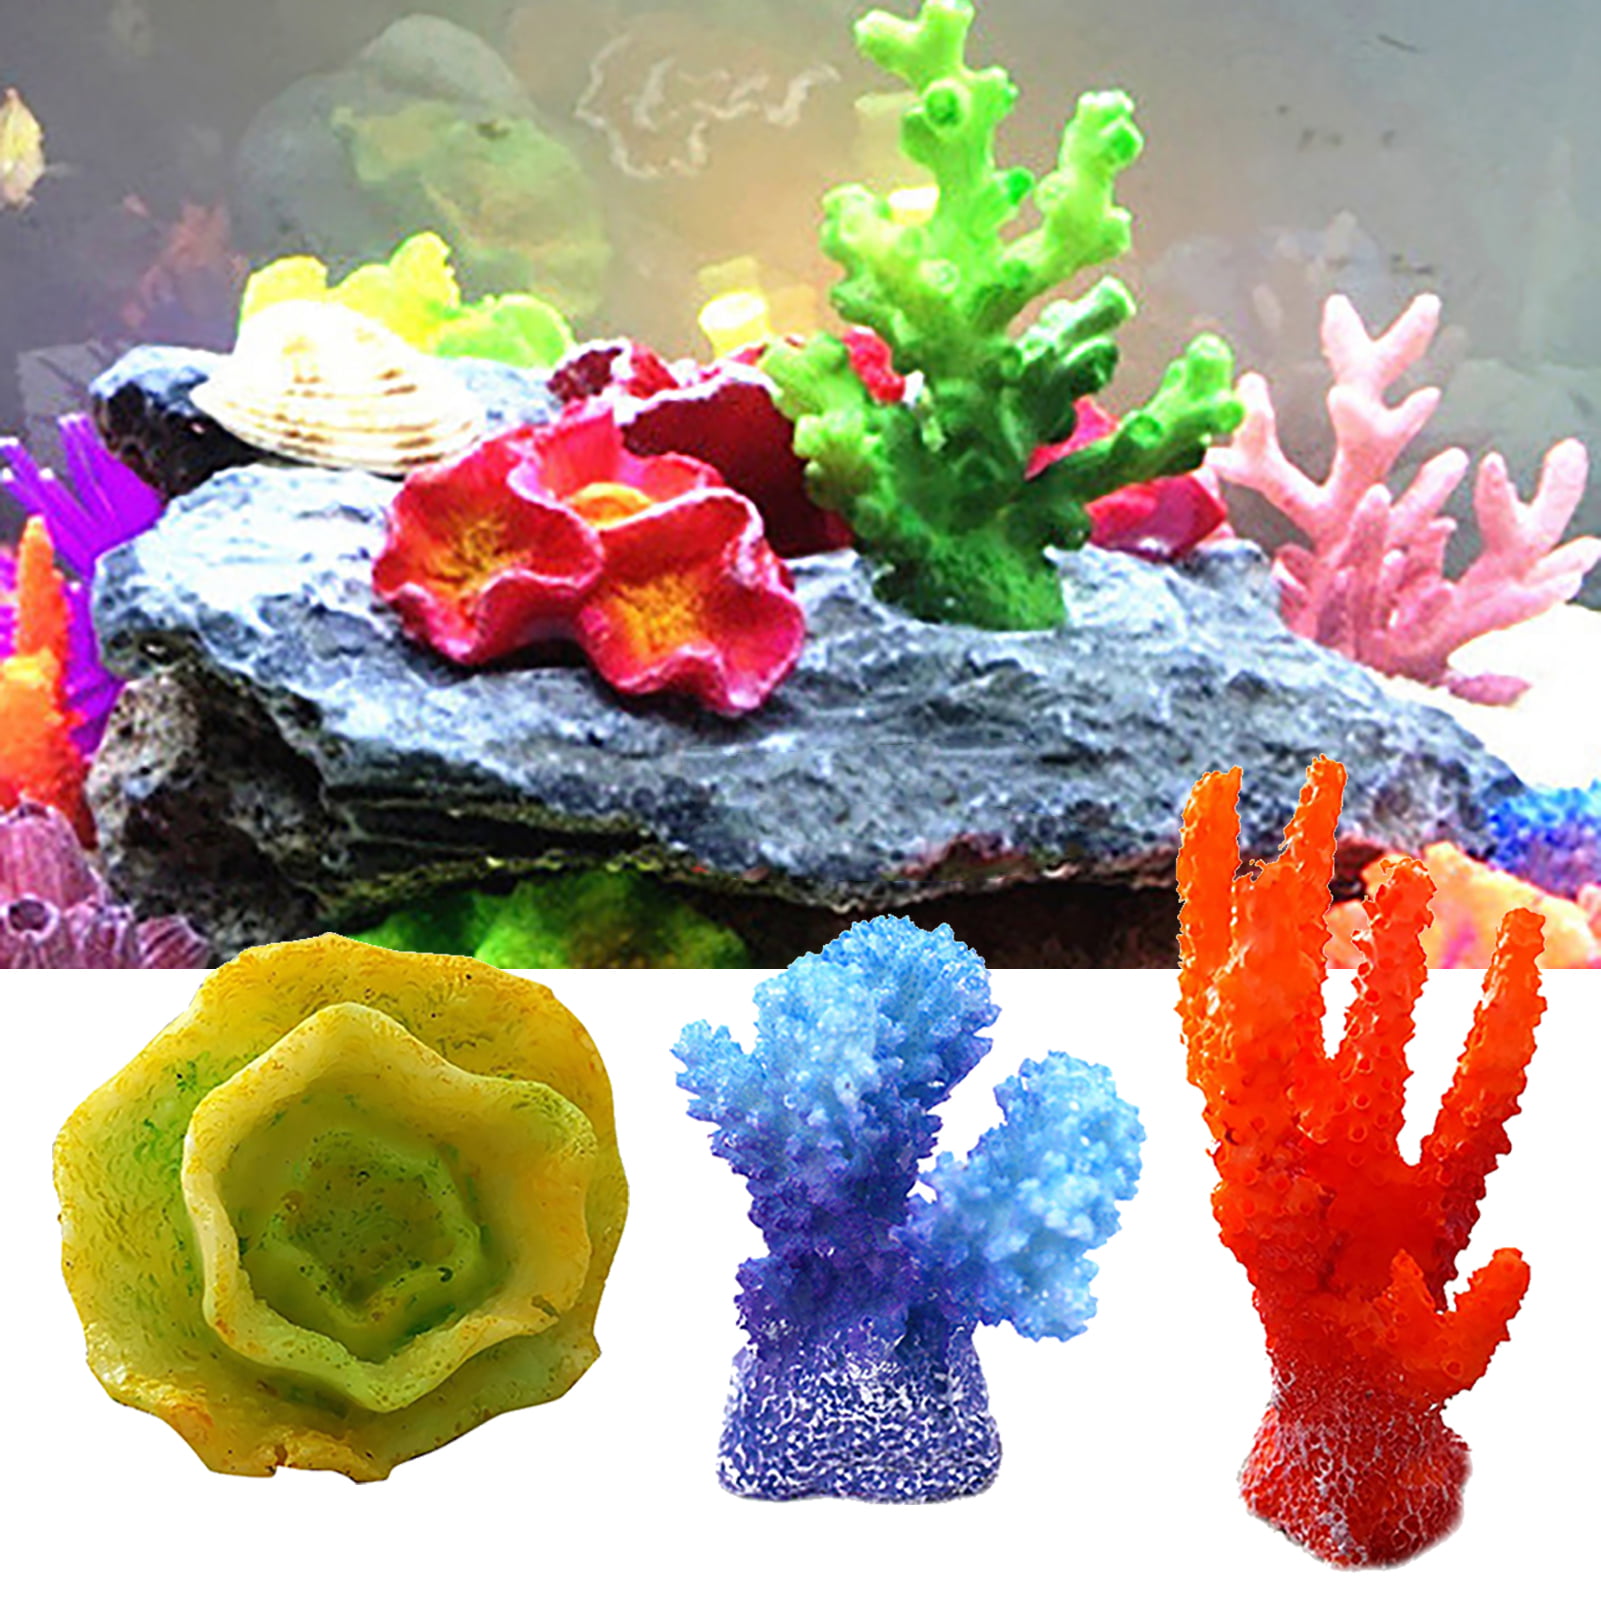 Artificial Resin Coral For Aquarium Fish Tank Decoration Underwater Ornament Hot